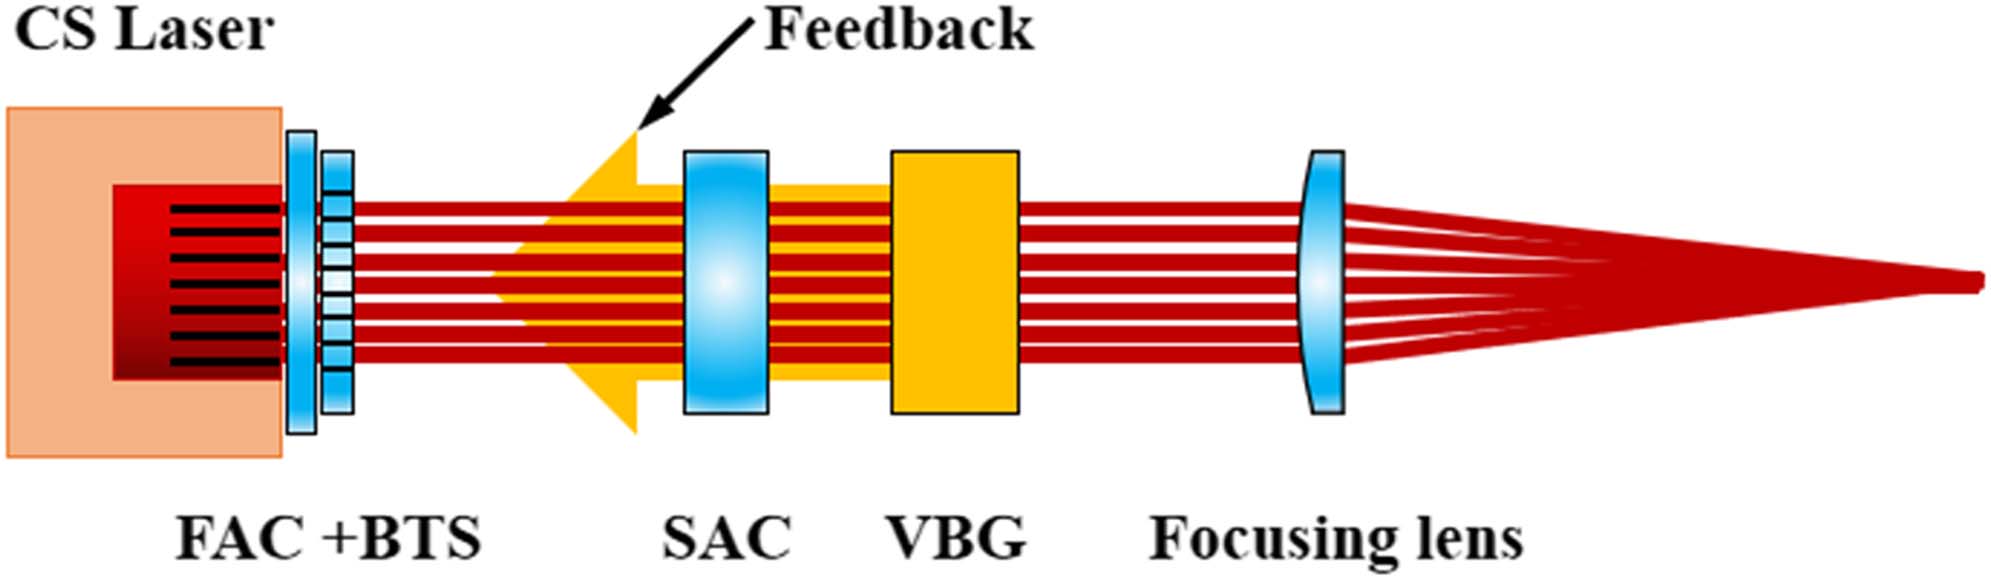 External cavity feedback structure diagram based on FAC + BTS + SAC + VBG.